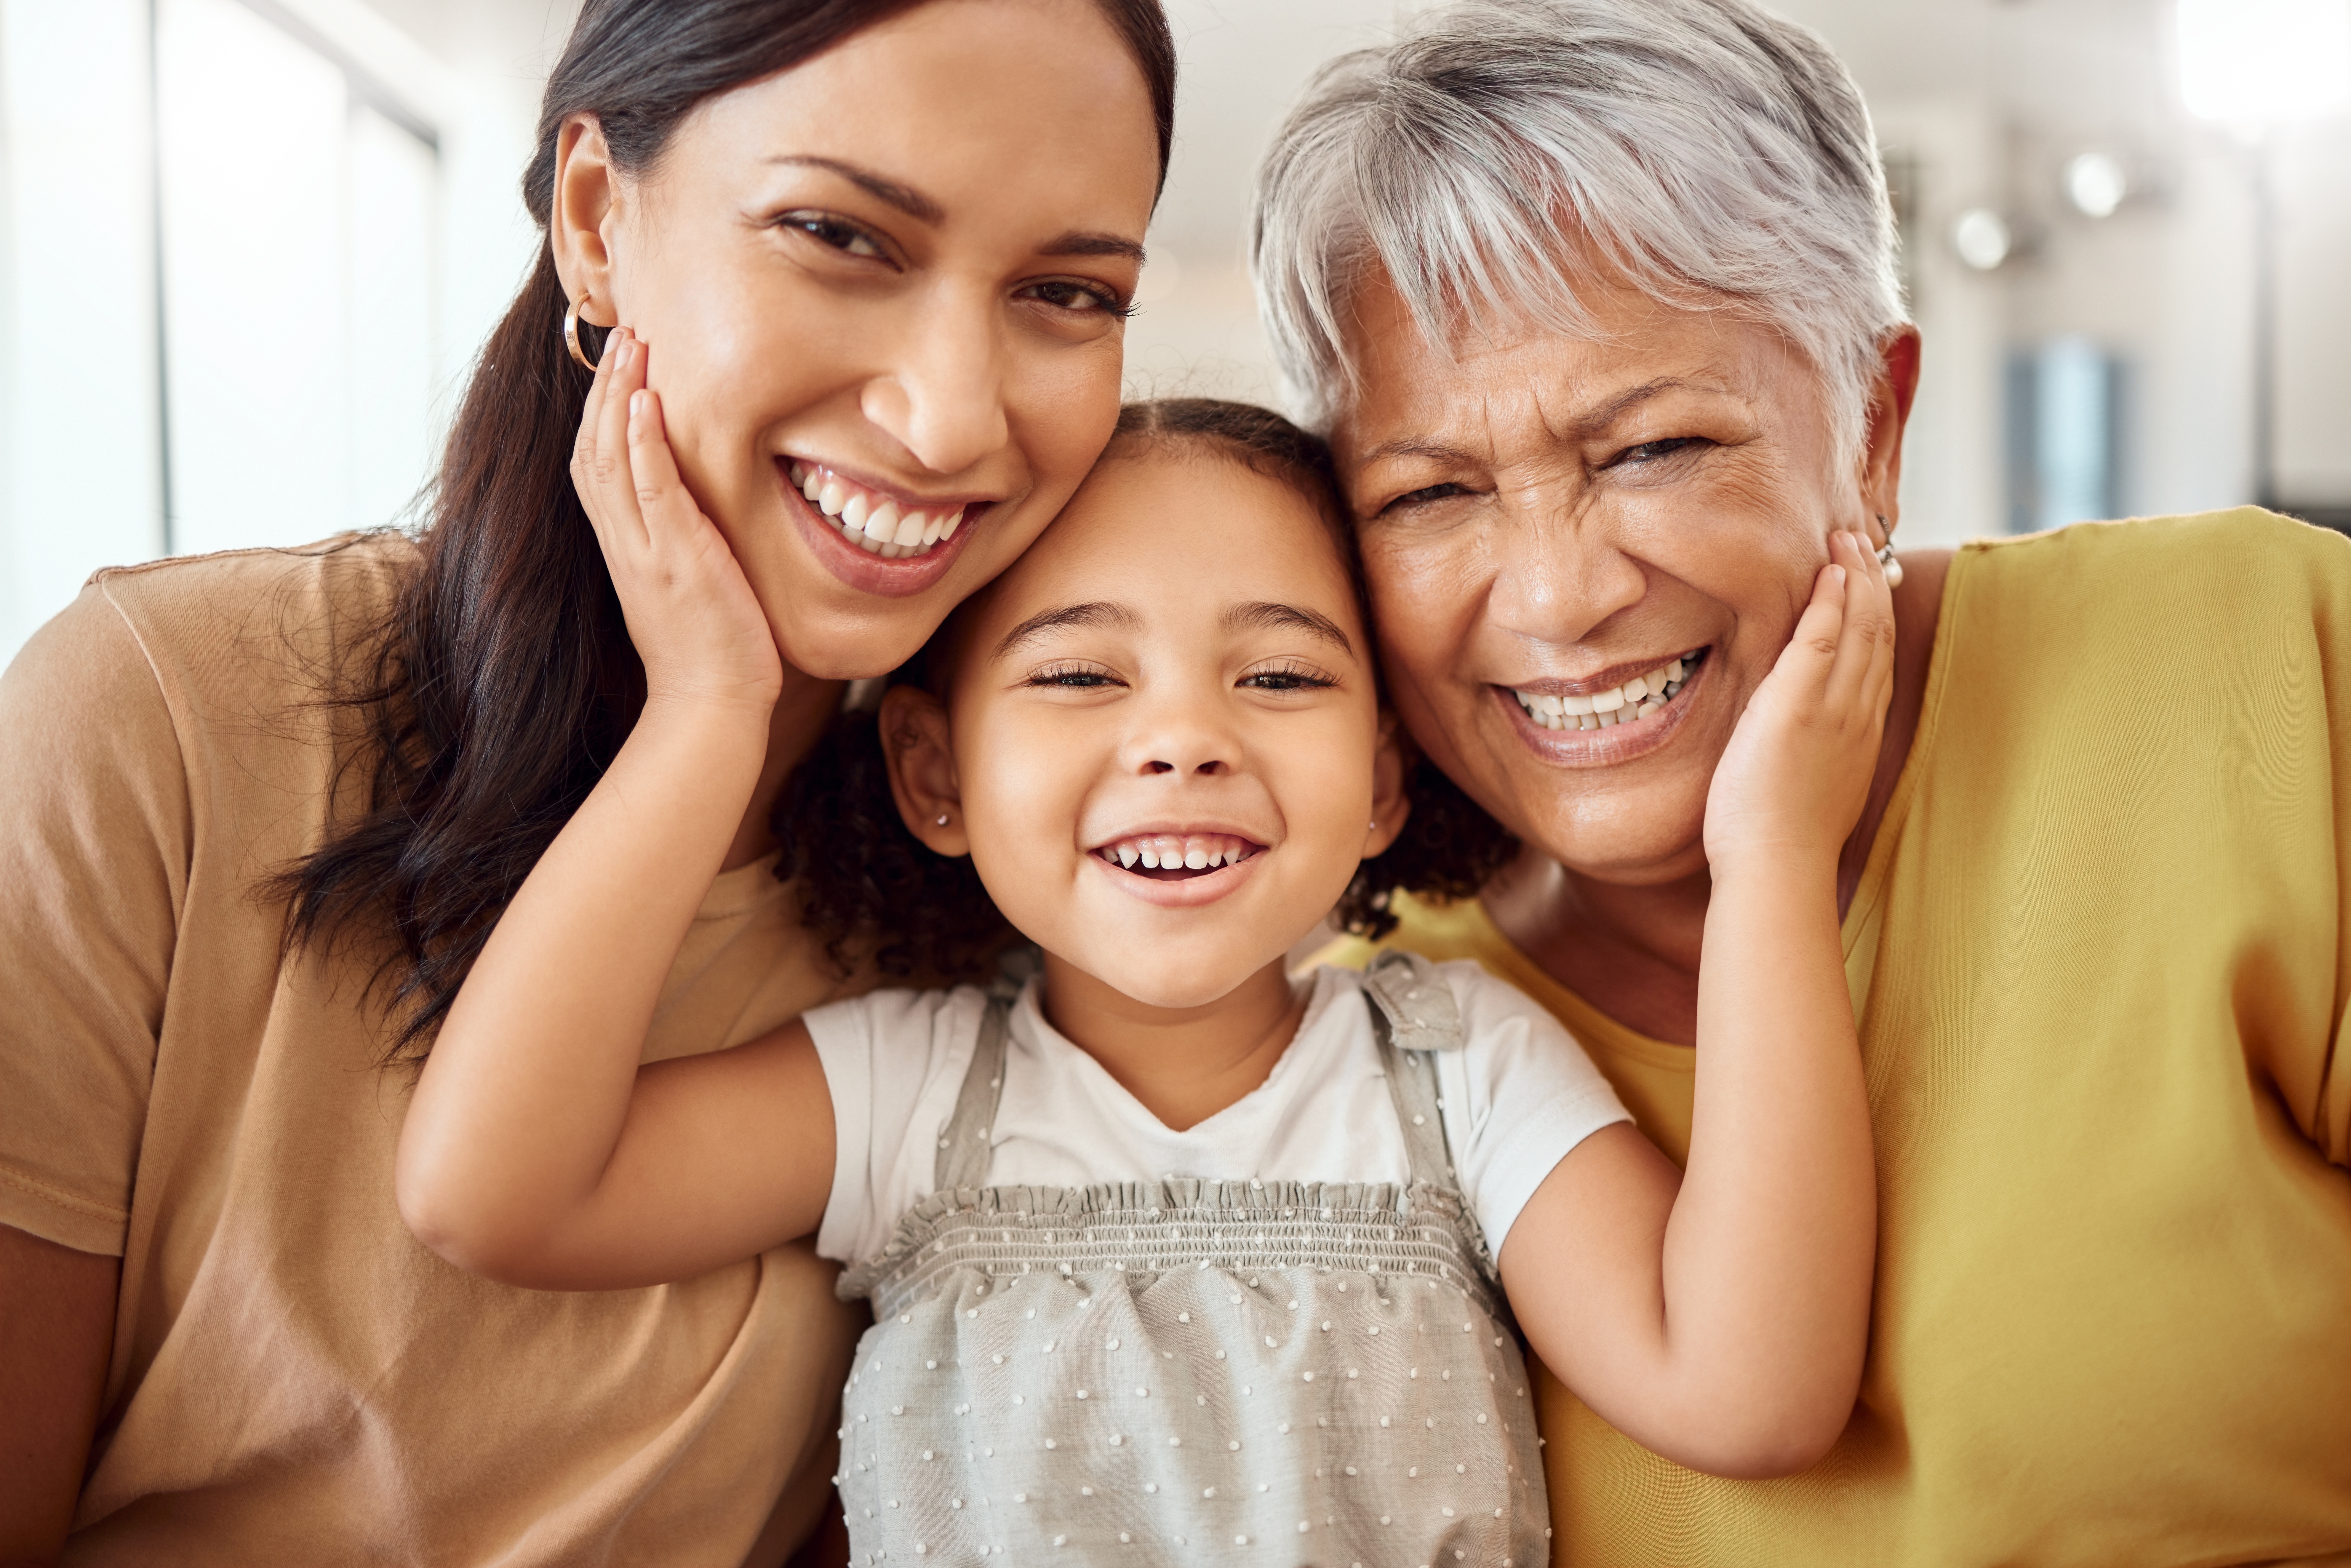 Three generations of women smiling | Source: Shutterstock